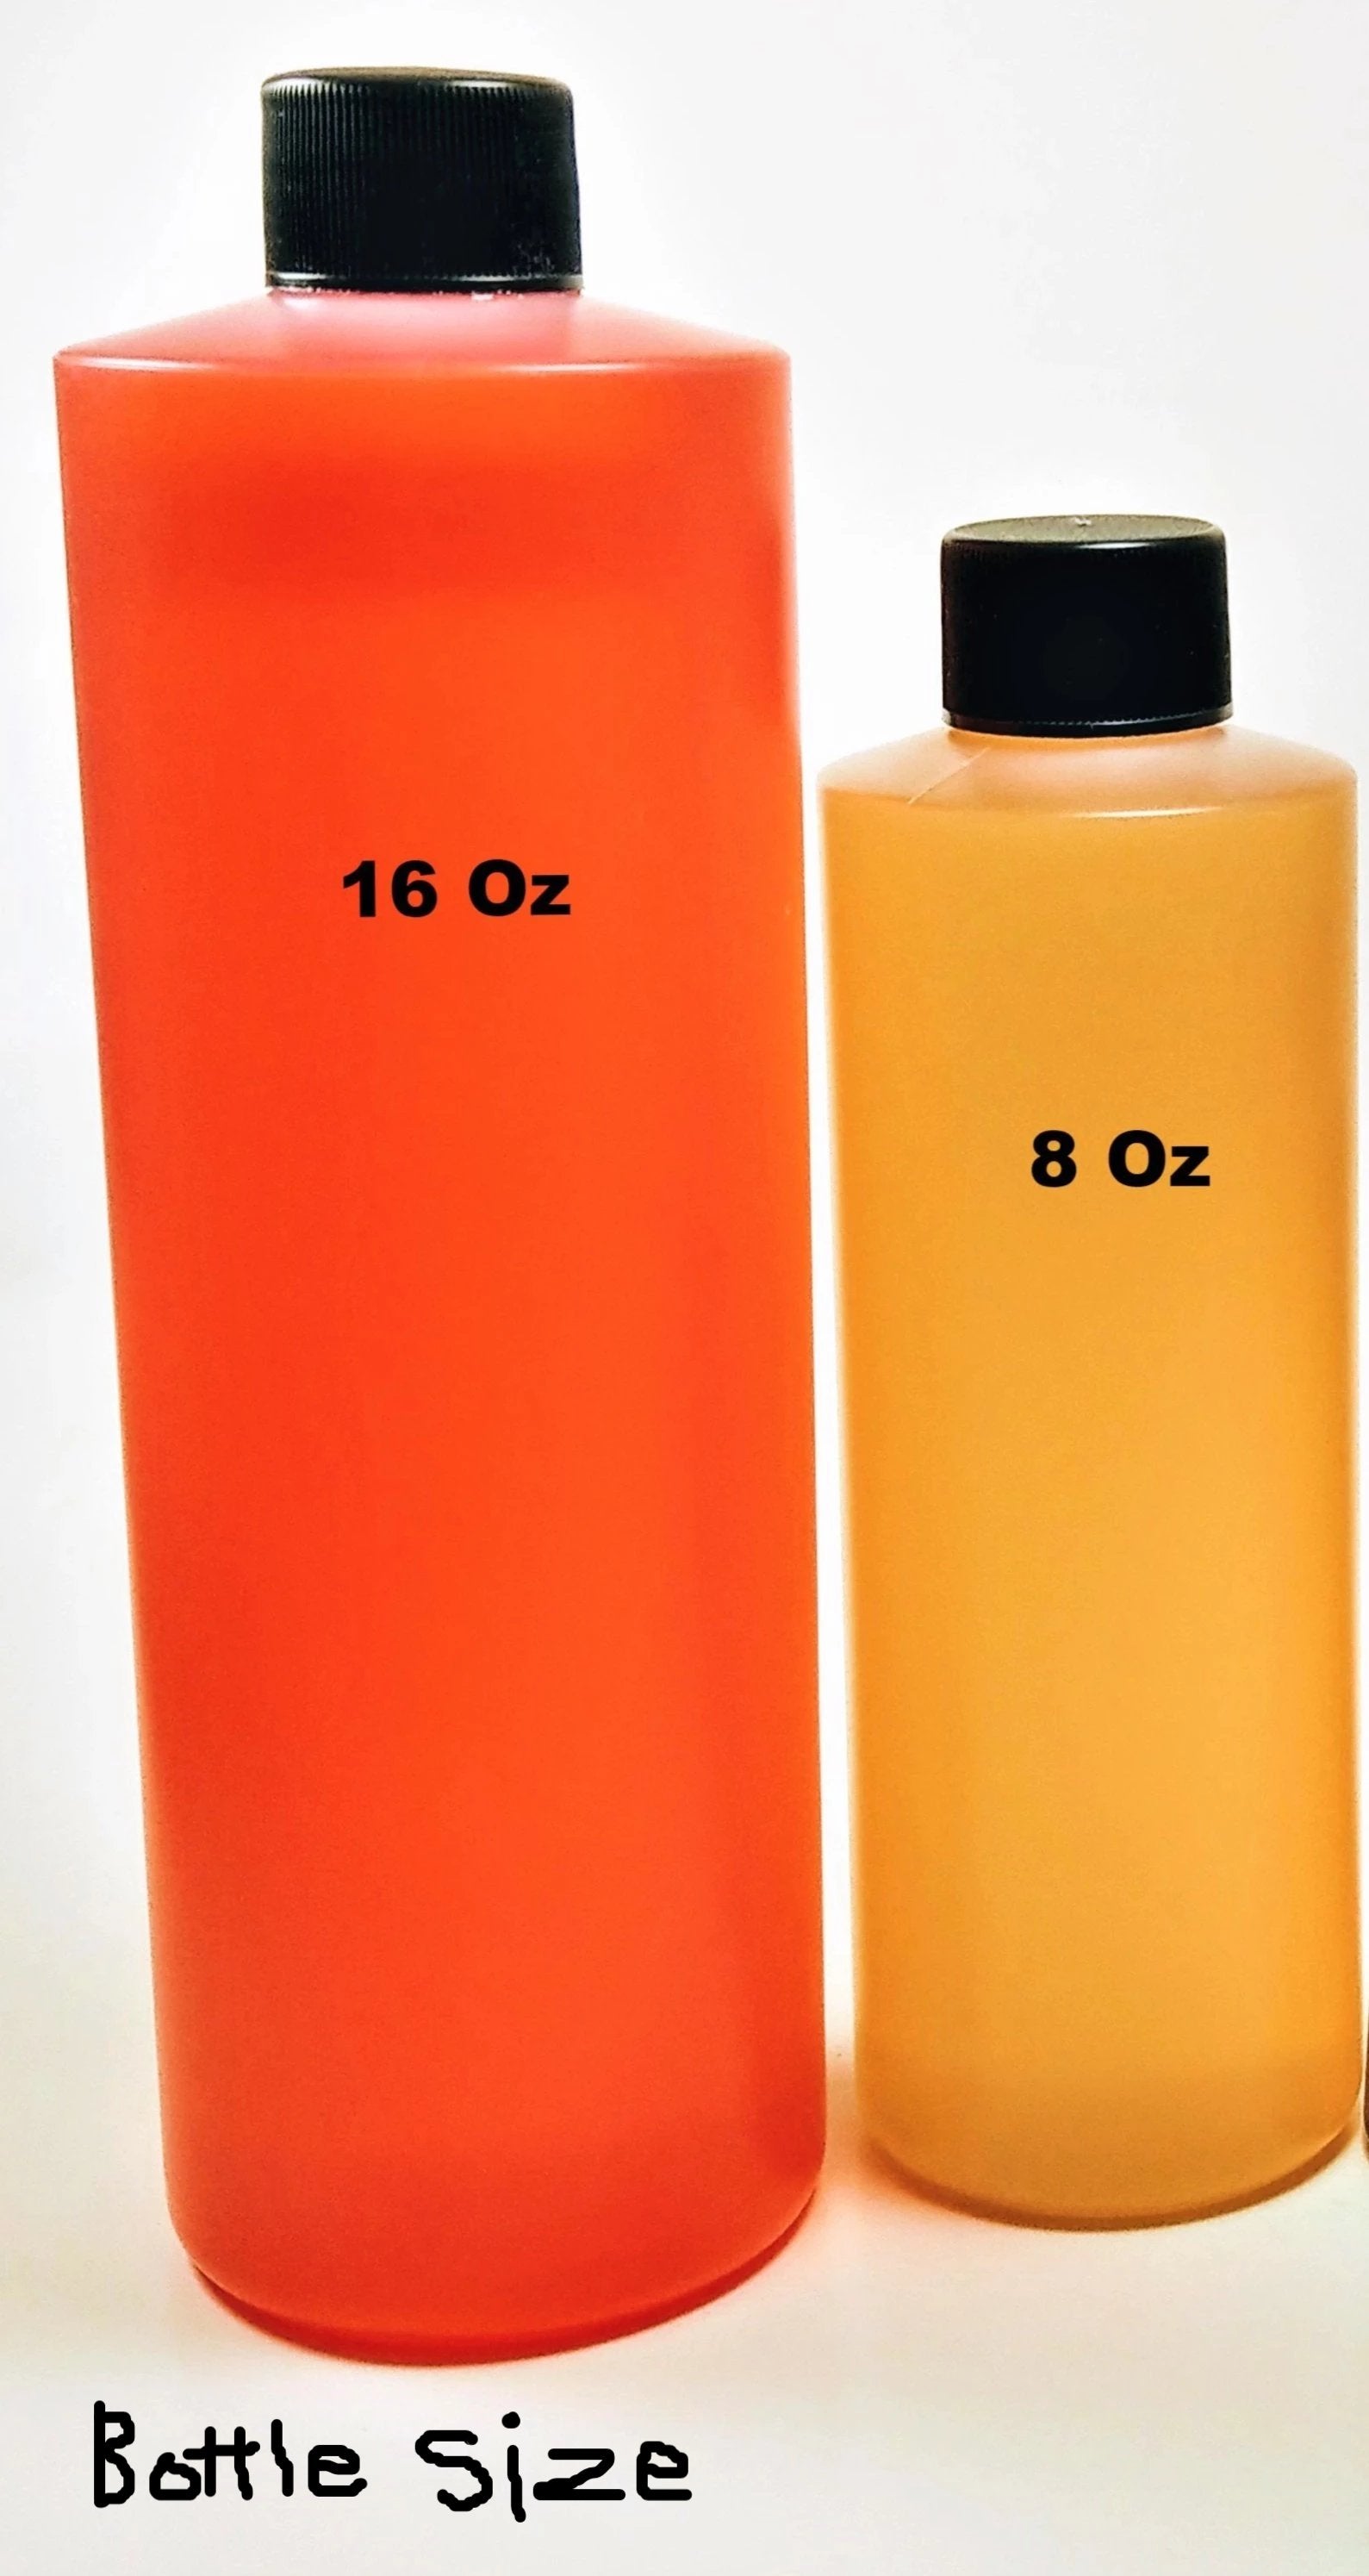 Egyptian Musk Fragrances Xio's Body Oil Scented Fragrances – Xio's